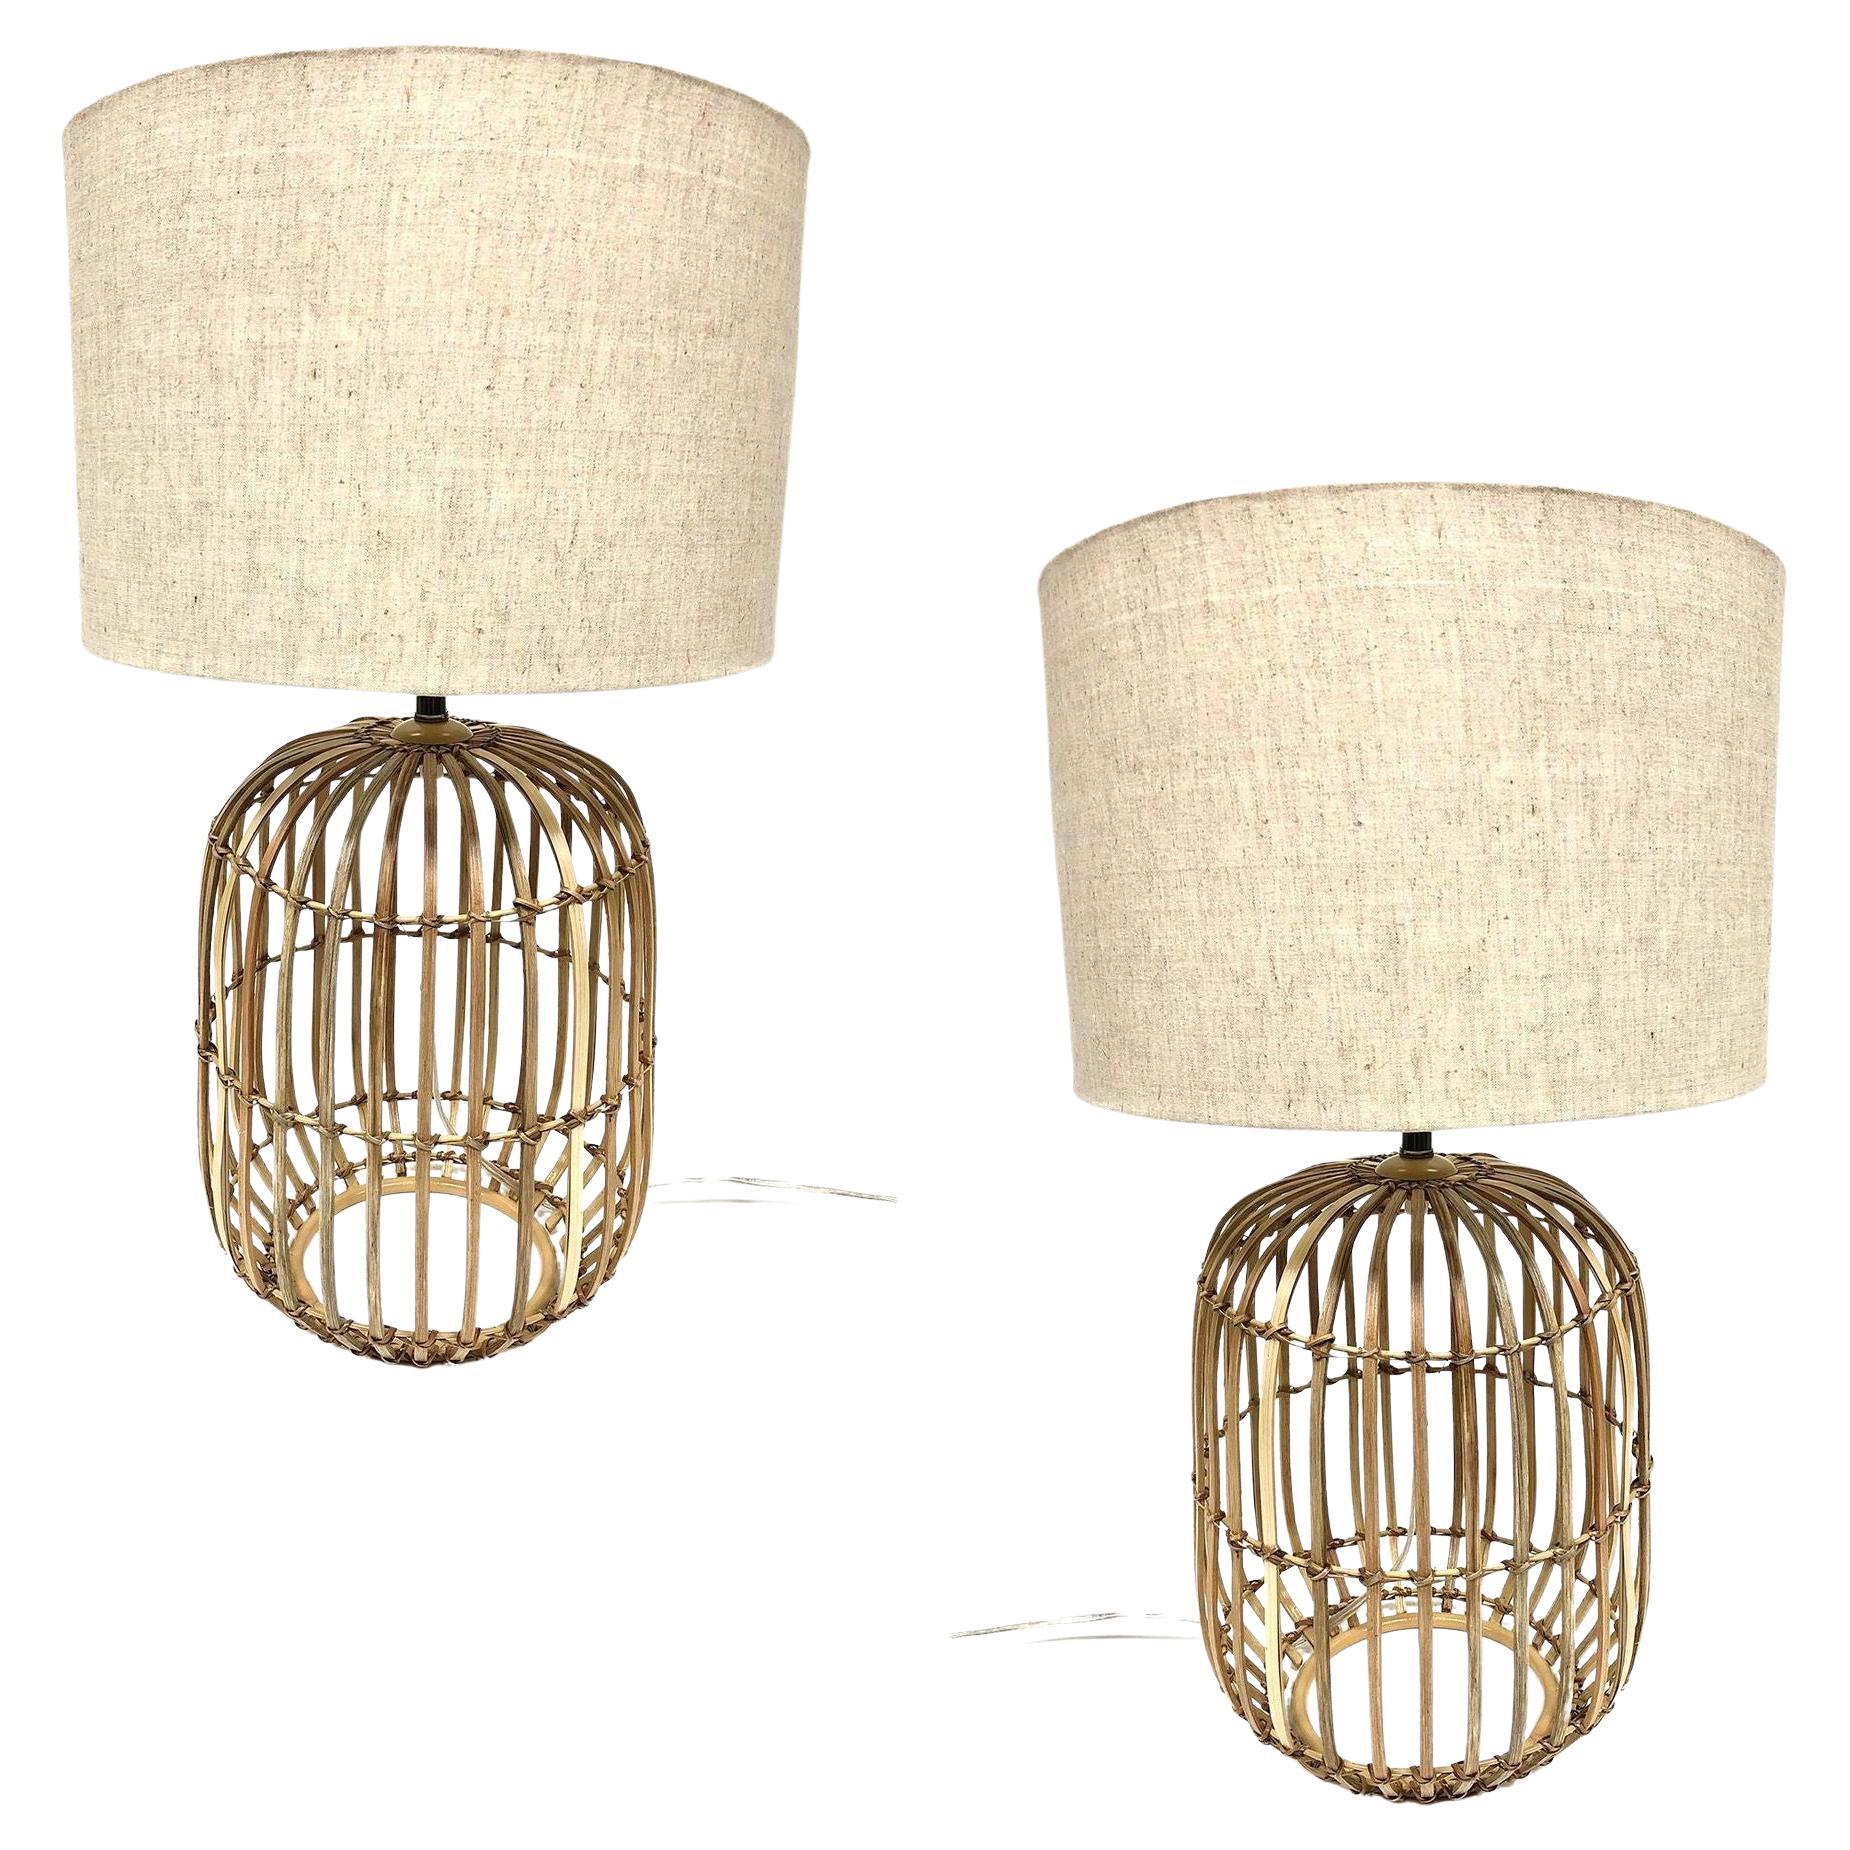 Split Rattan Basket Weave "Barrel" Table Lamp Pair, w/ Shades